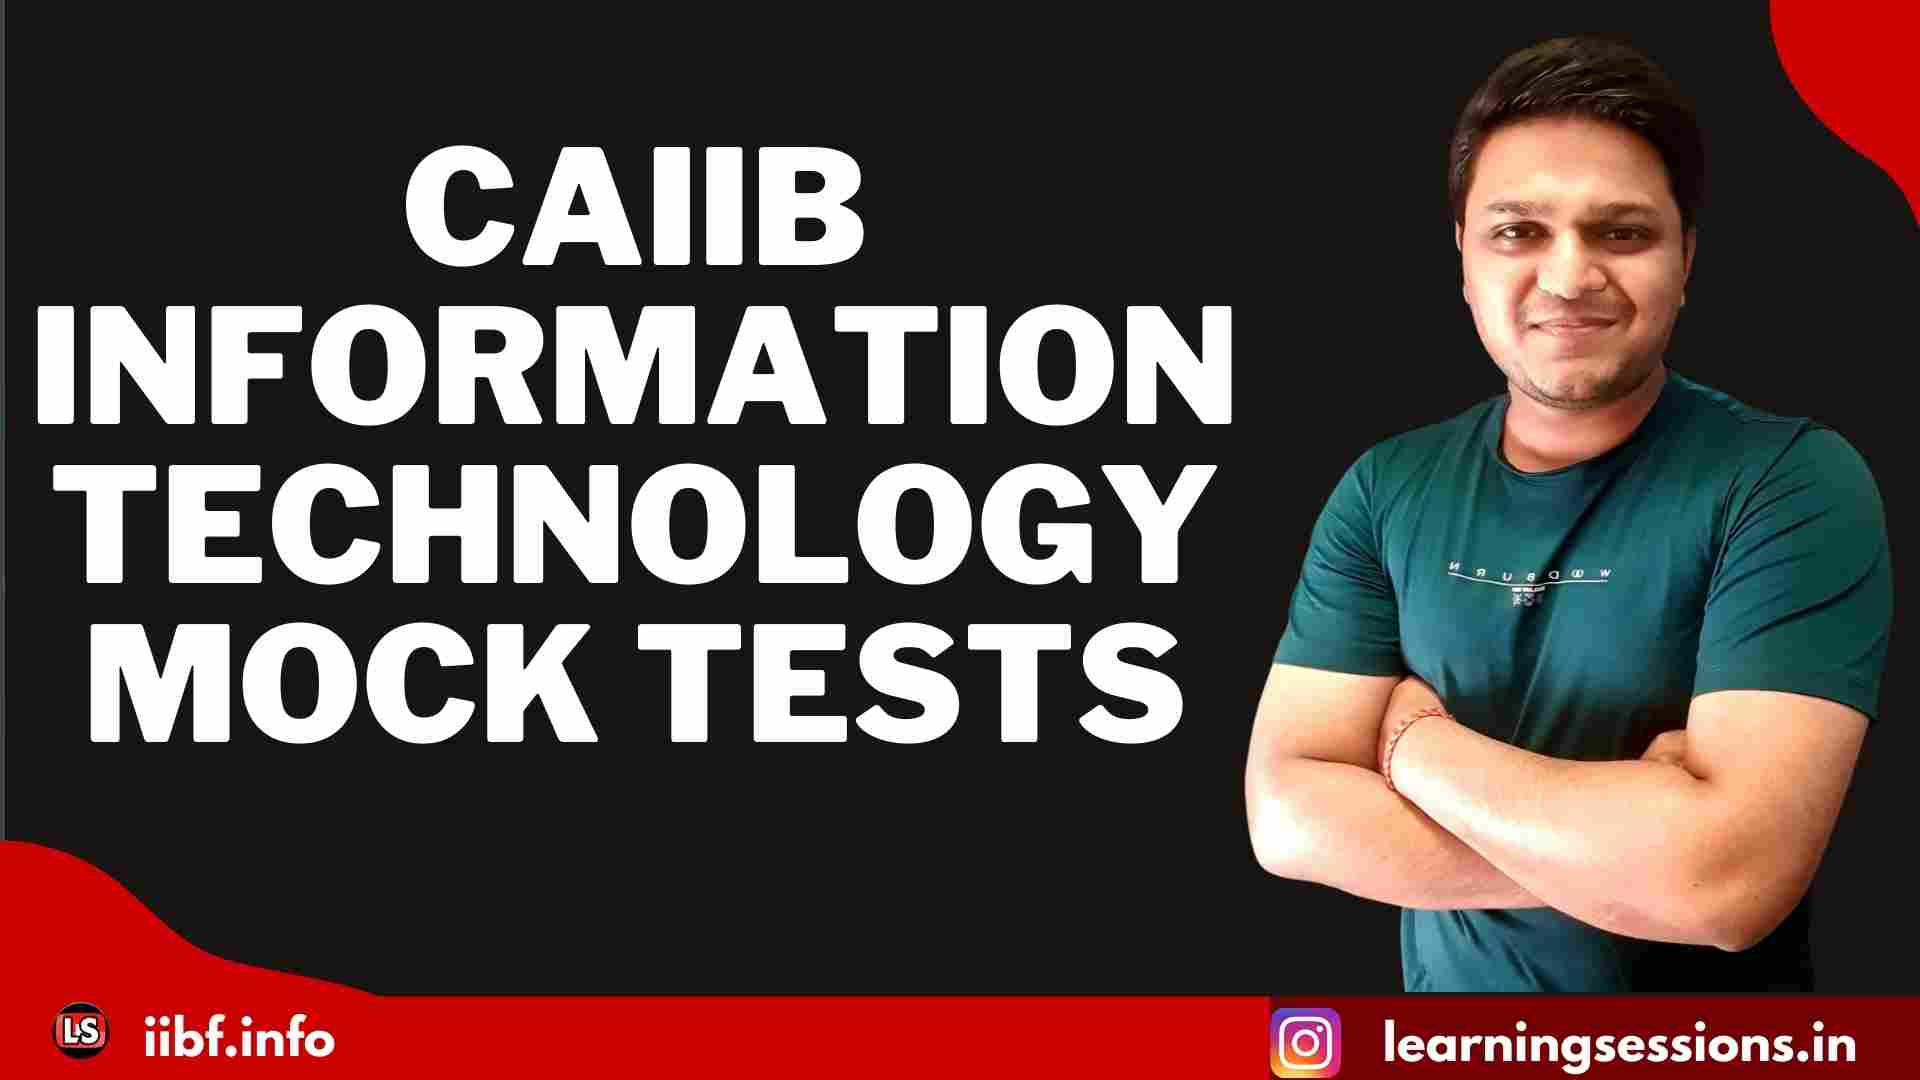 IIBF CAIIB INFORMATION TECHNOLOGY MOCK TESTS 2022